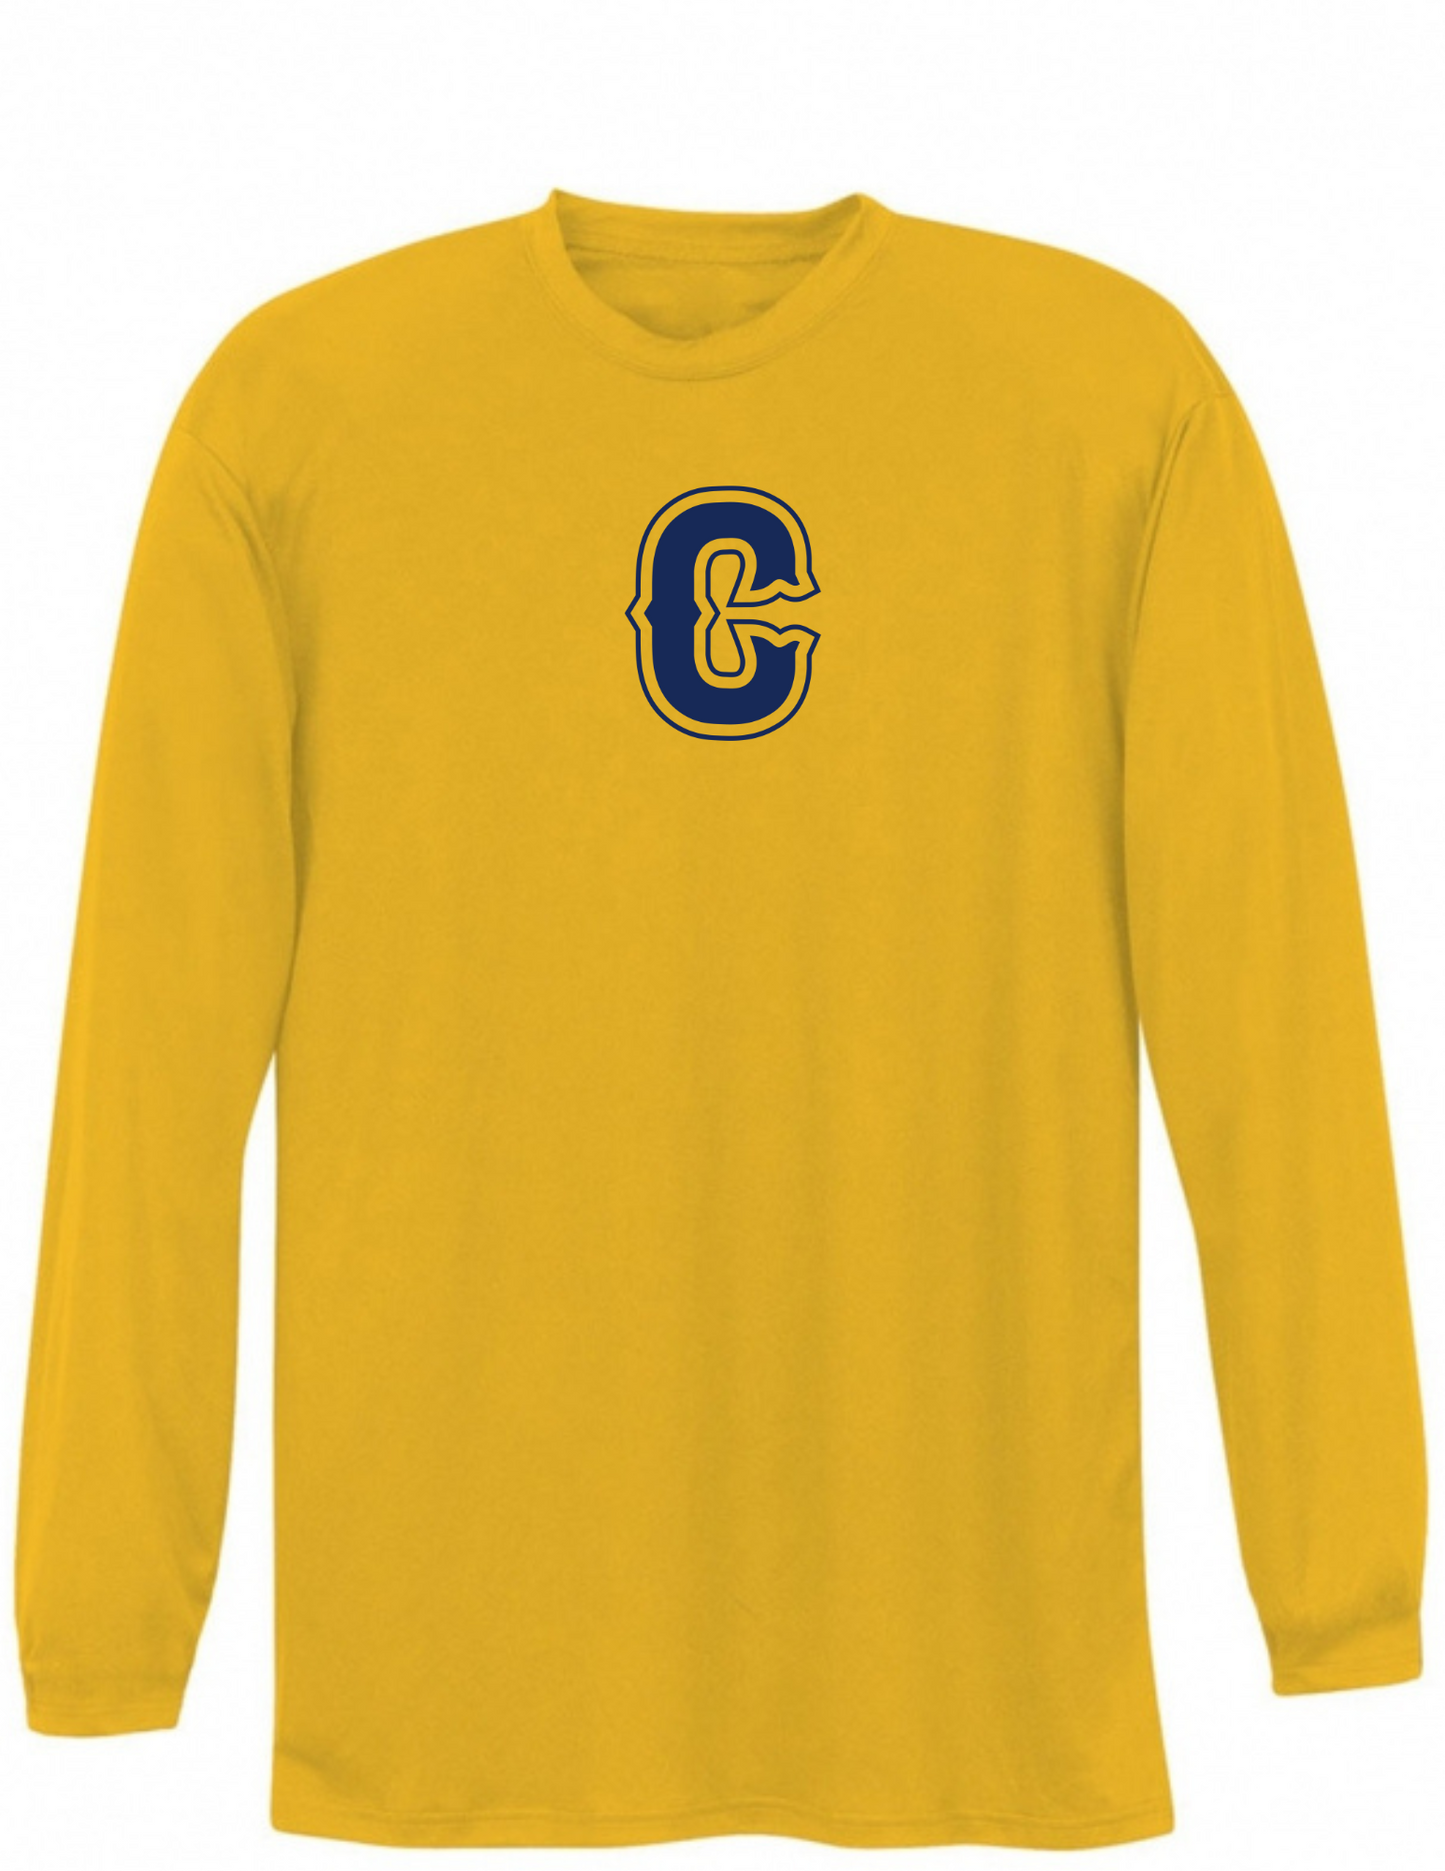 The "C"lassic Unisex Cohoes Little League  Performance Long-sleeved Shirt